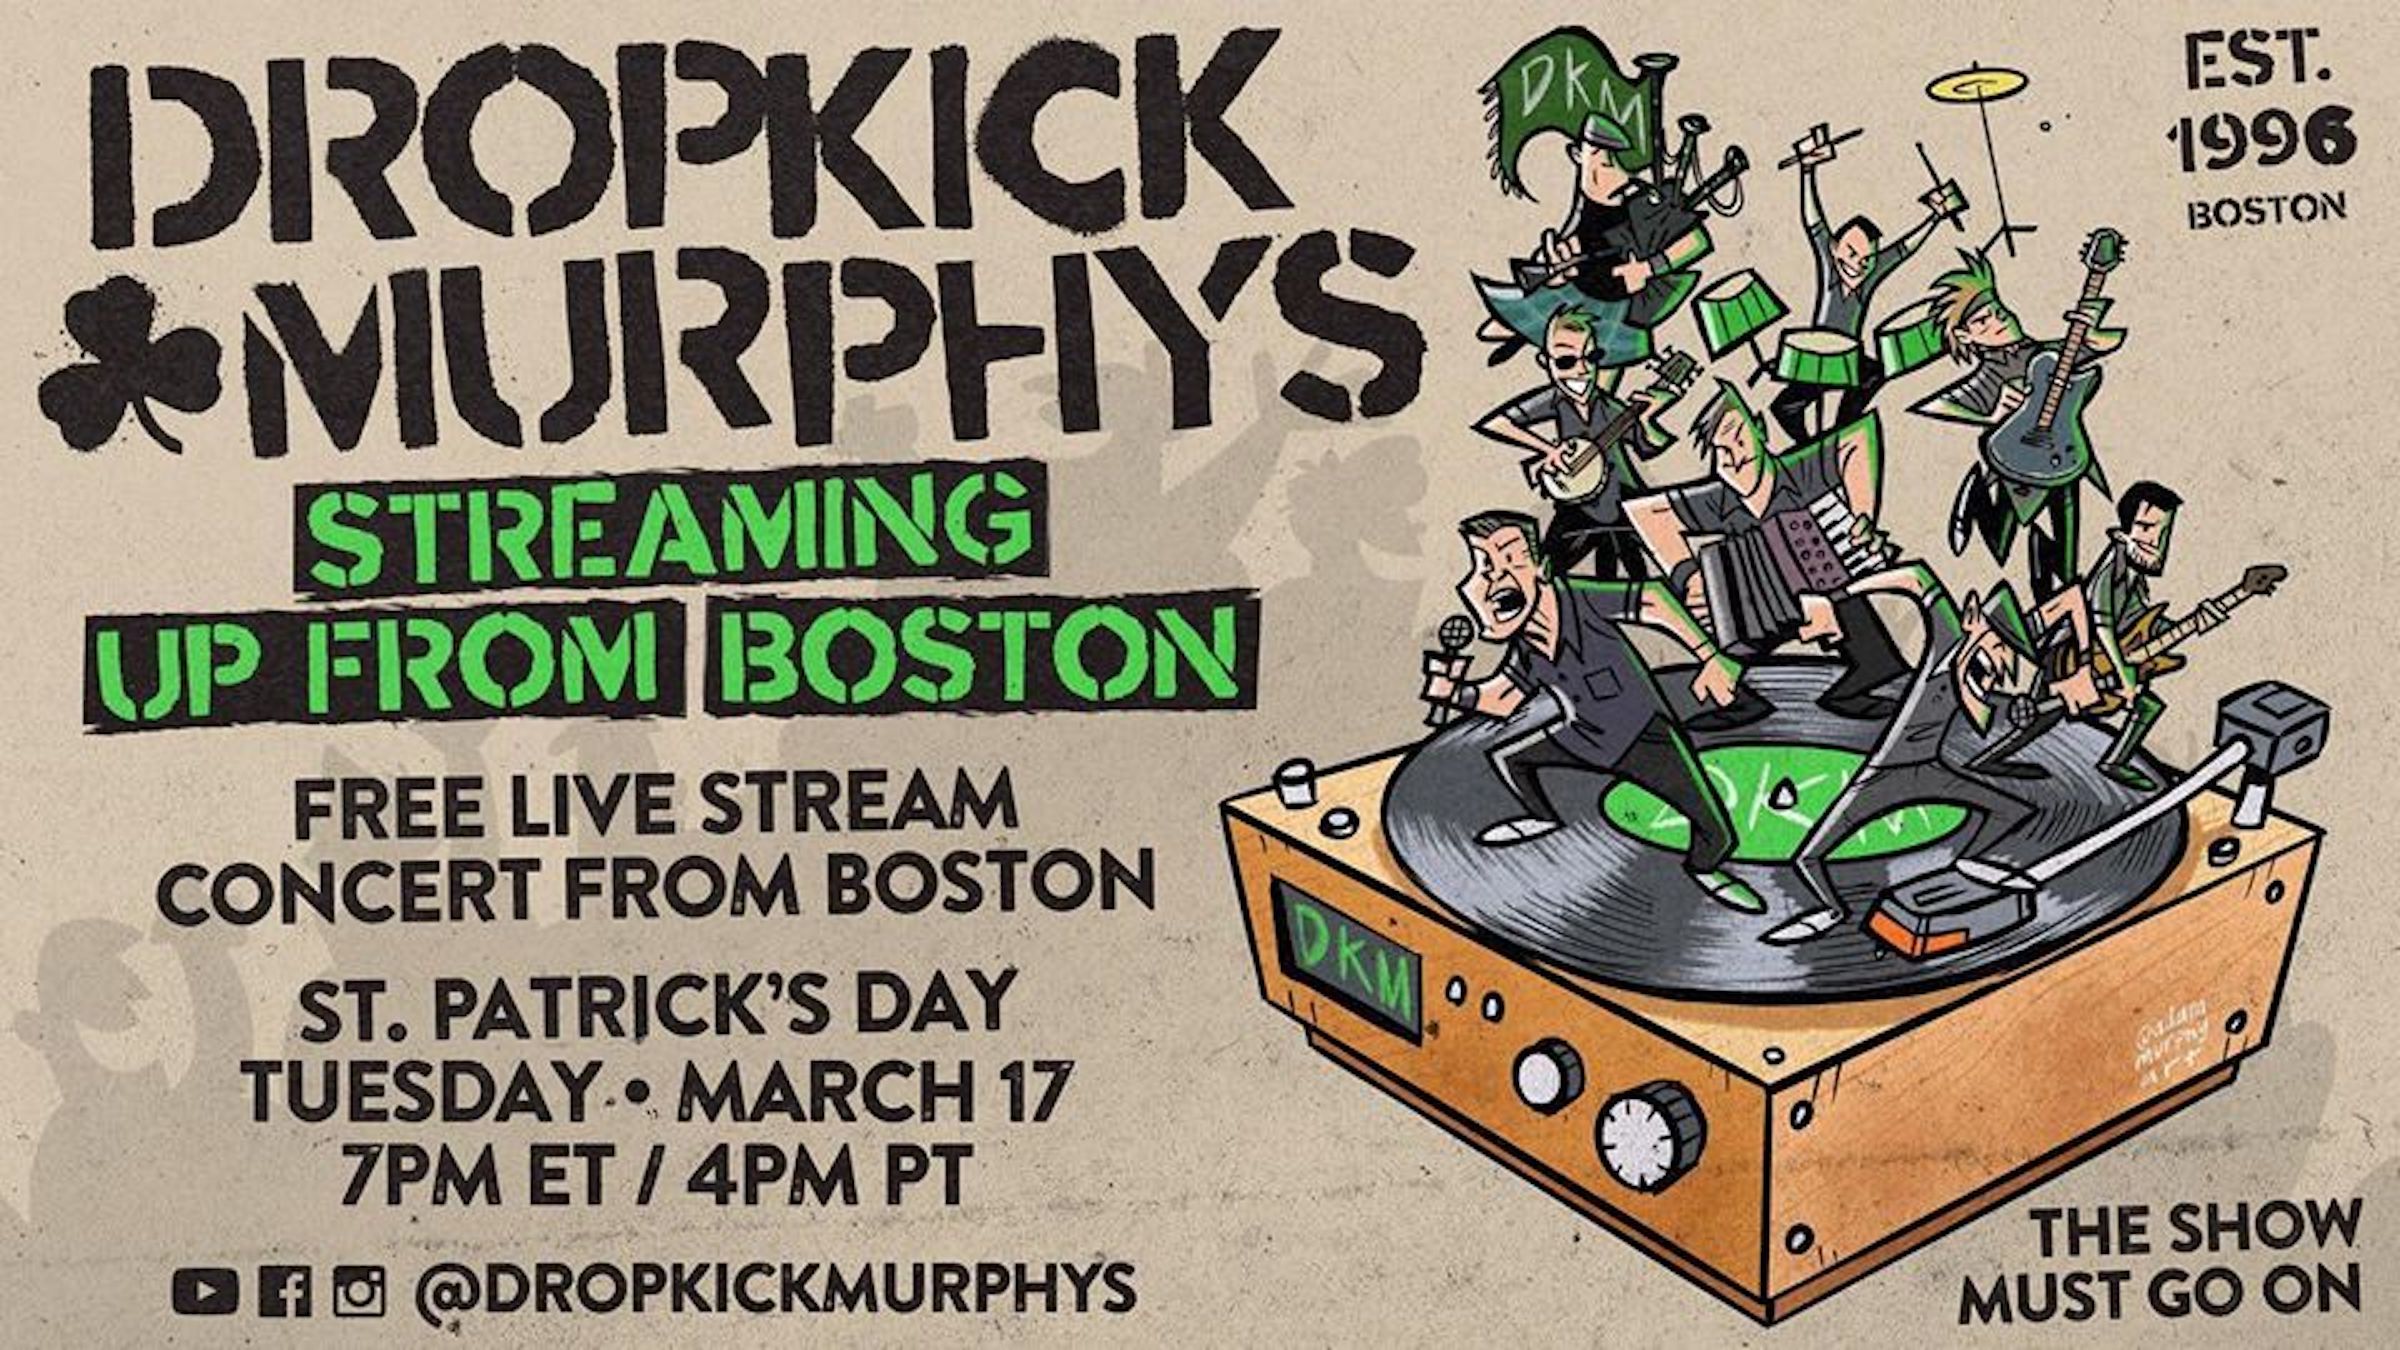 Dropkick Murphys holding virtual St. Patrick's Day show